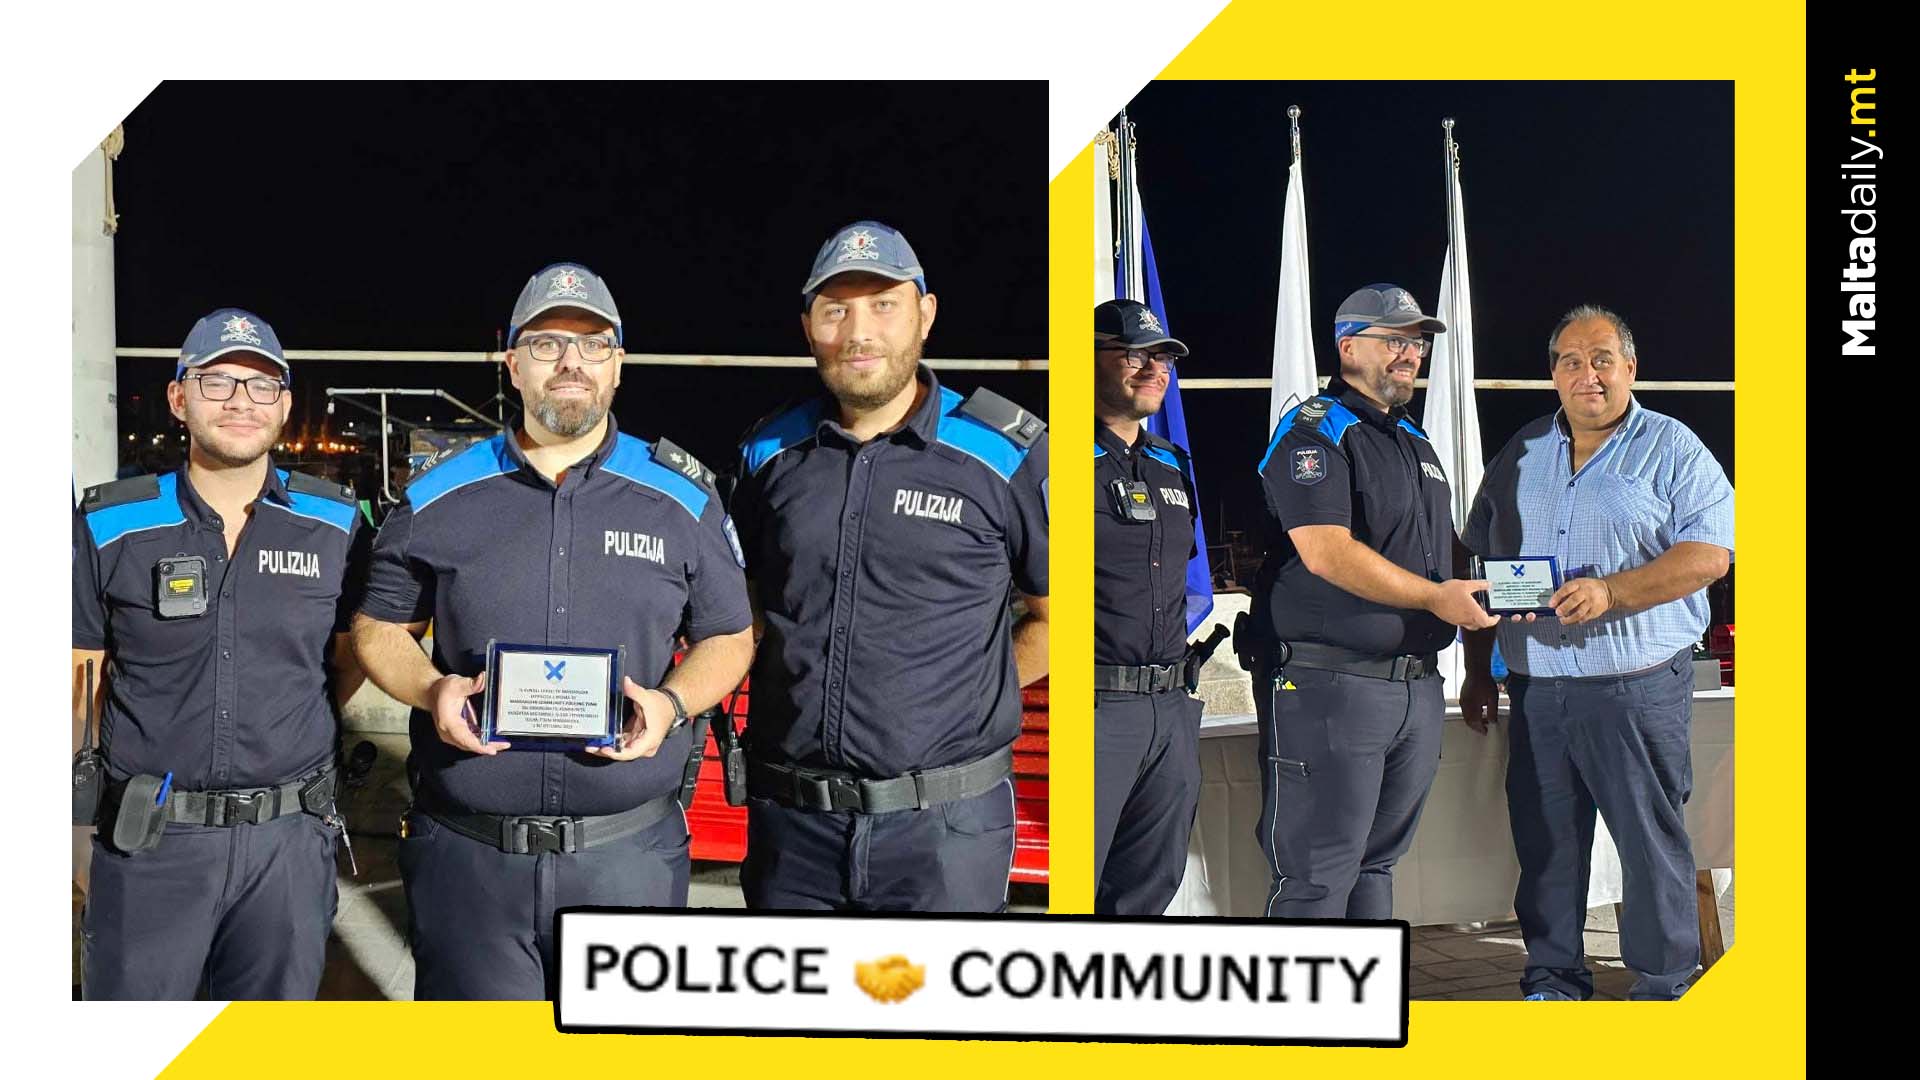 Community Police Team Awarded For Marsaxlokk Service